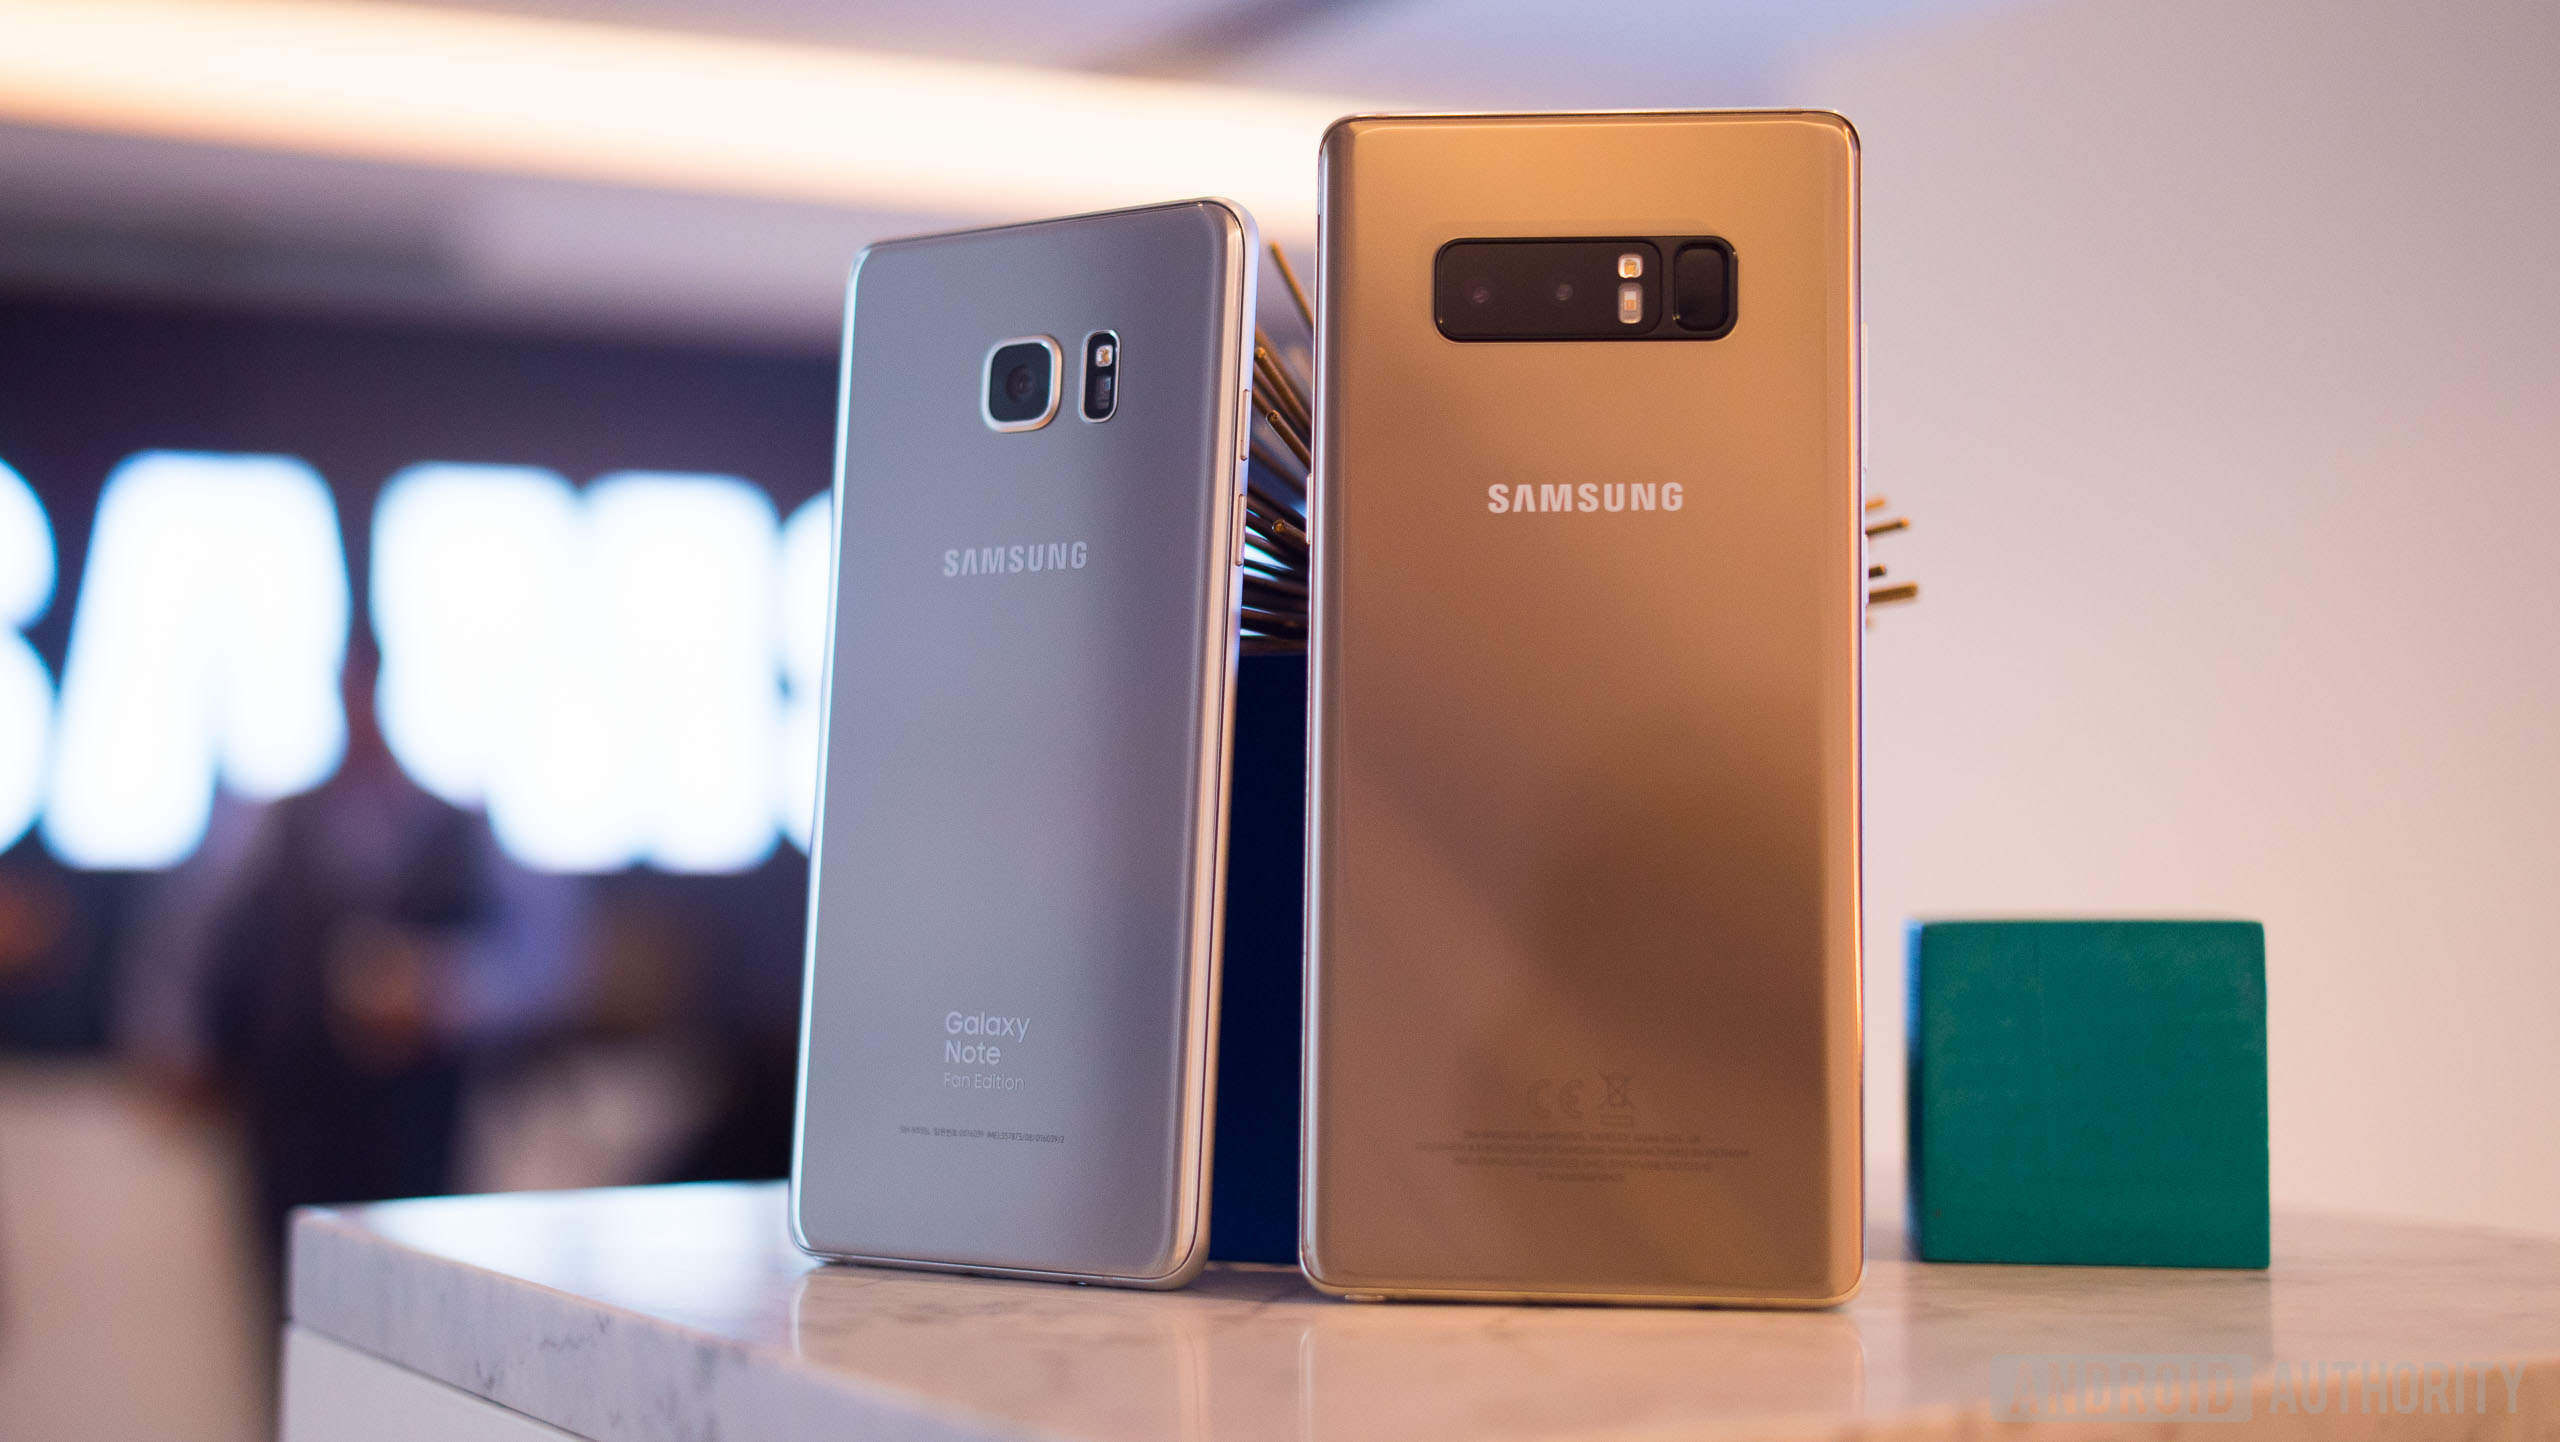 Galaxy note edition. Samsung Note 8 Gold Edition. Samsung Galaxy Note 8 цвета. Самсунг нот 8 плюс. Note 8 Olympic Edition Galaxy.